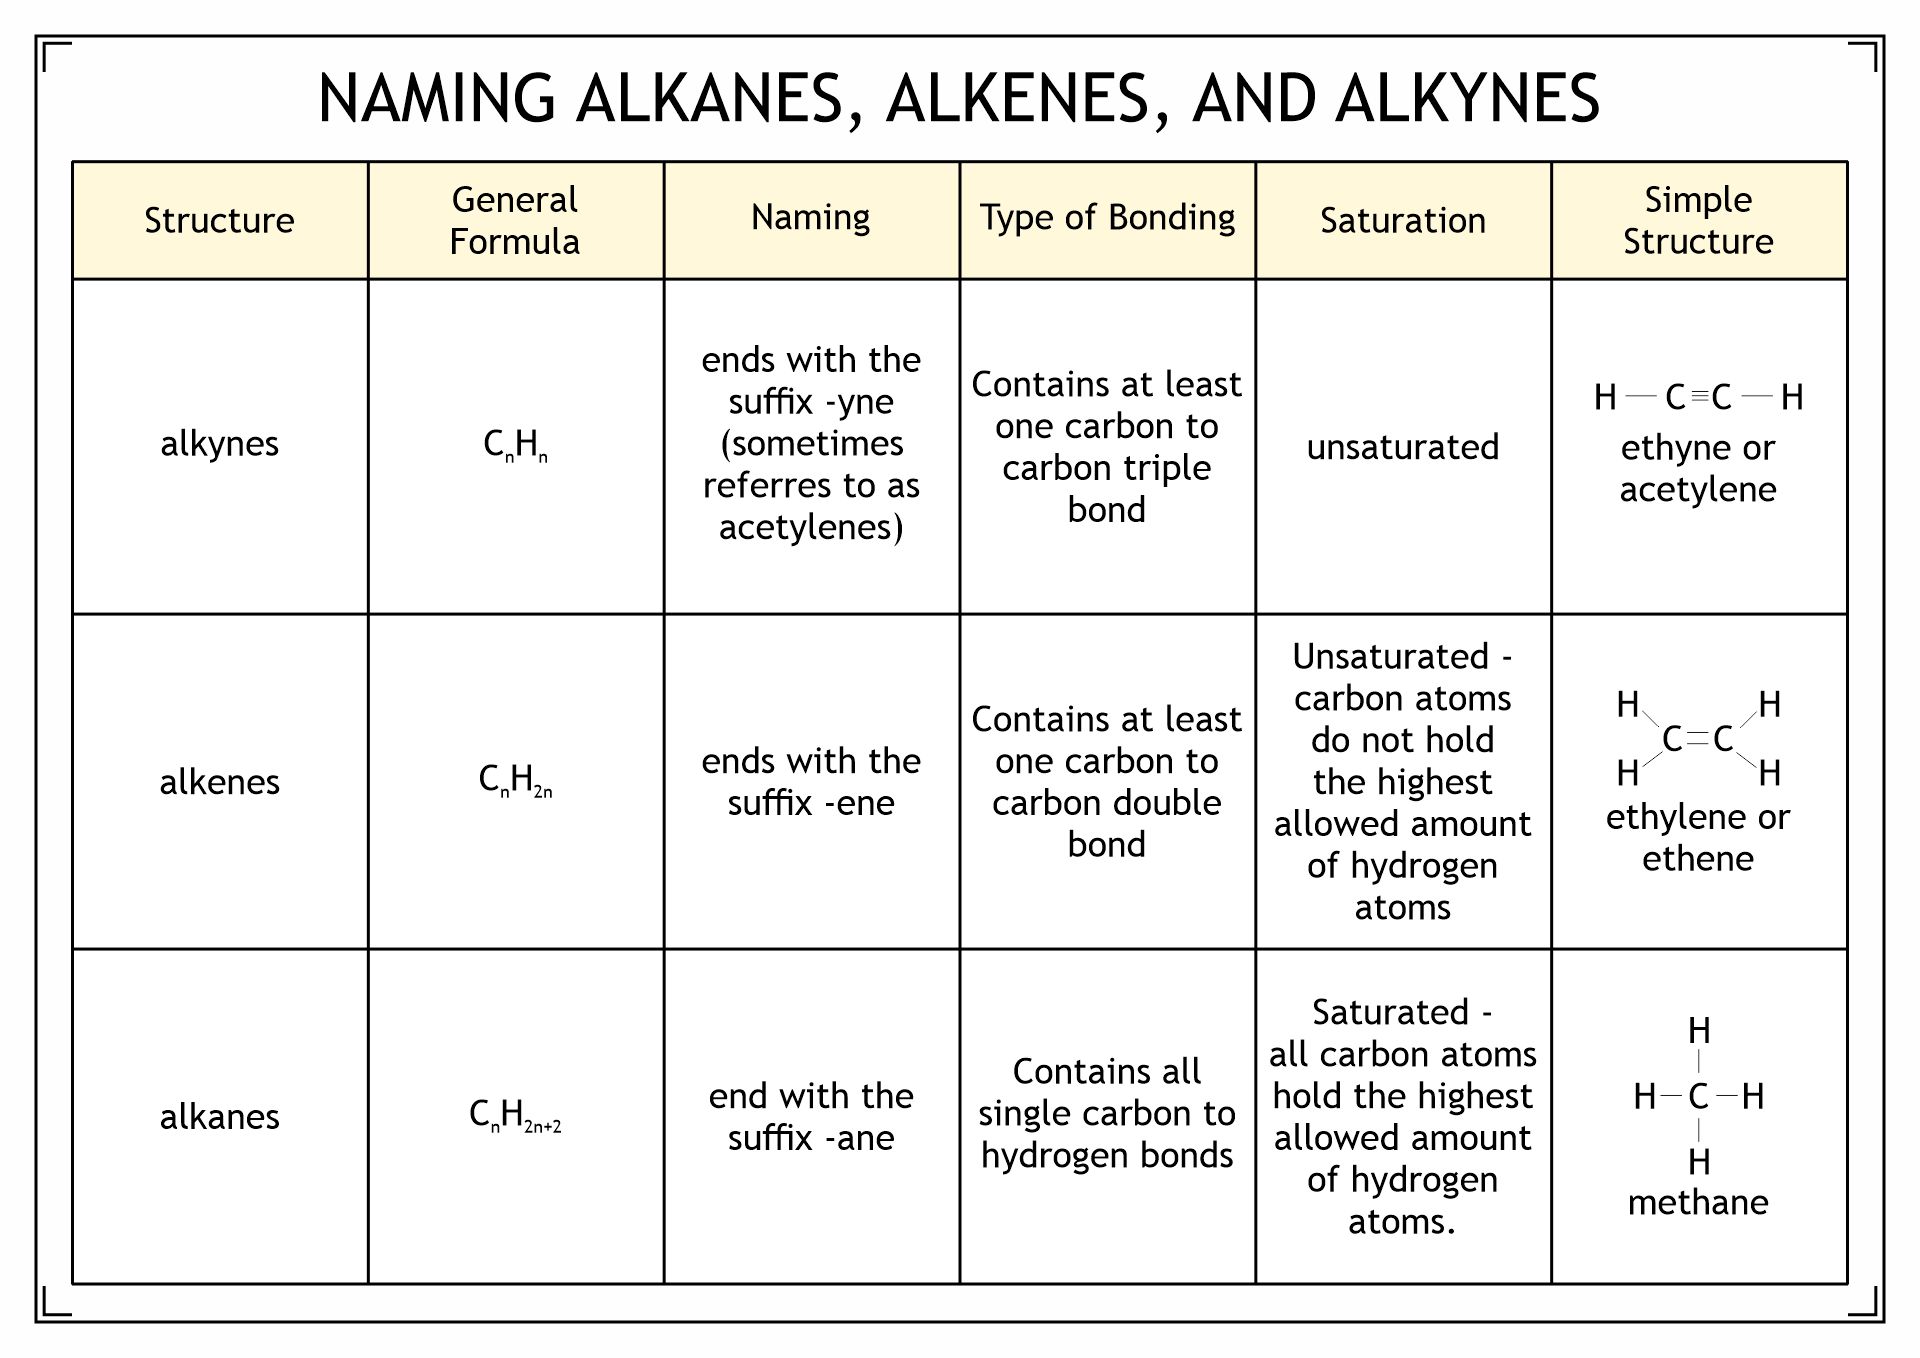 Naming Alkanes Alkenes and Alkynes Image